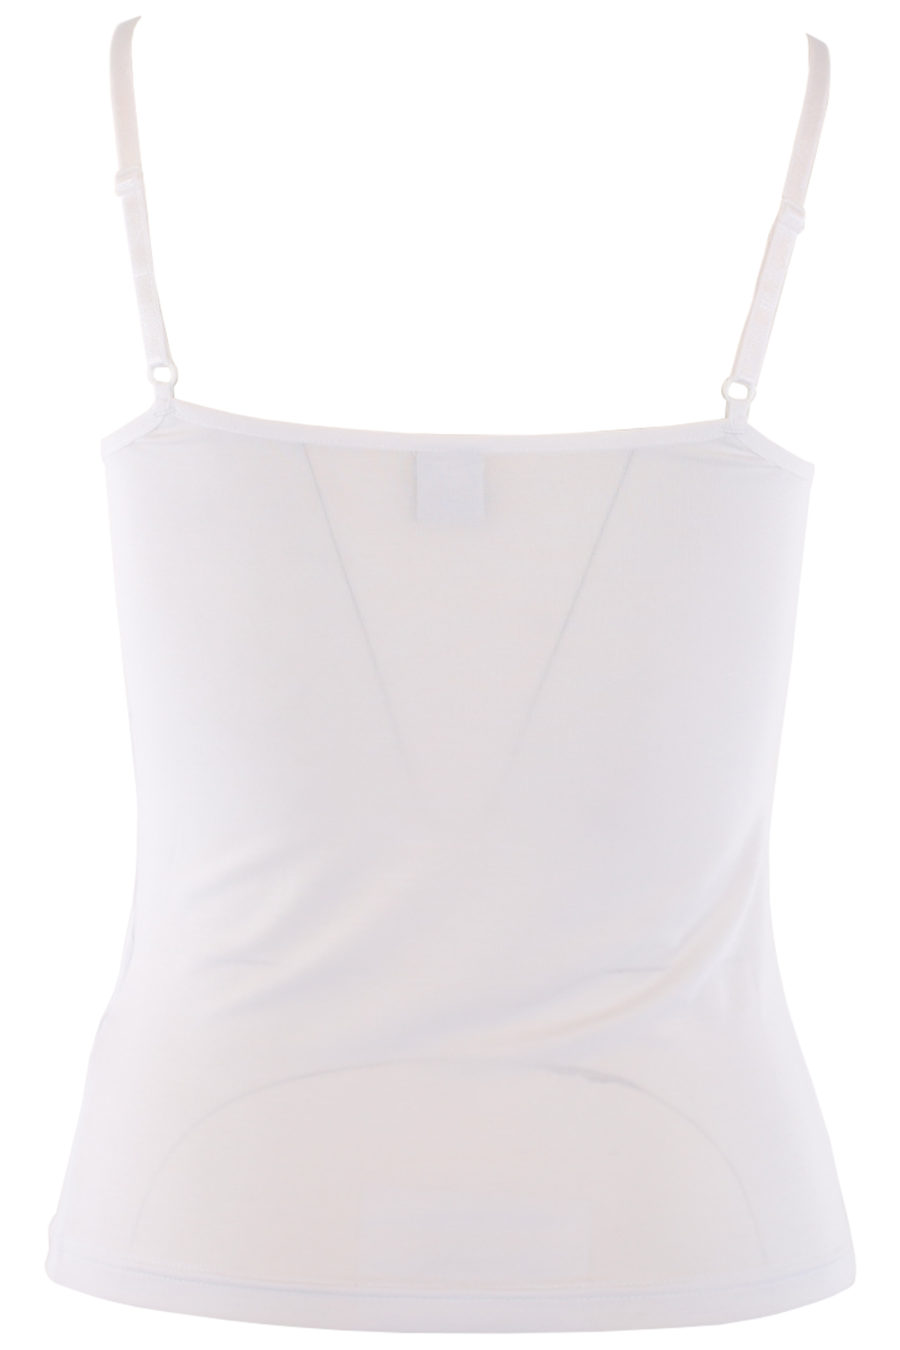 Camiseta interior blanca sin mangas con logo lateral - IMG 0663